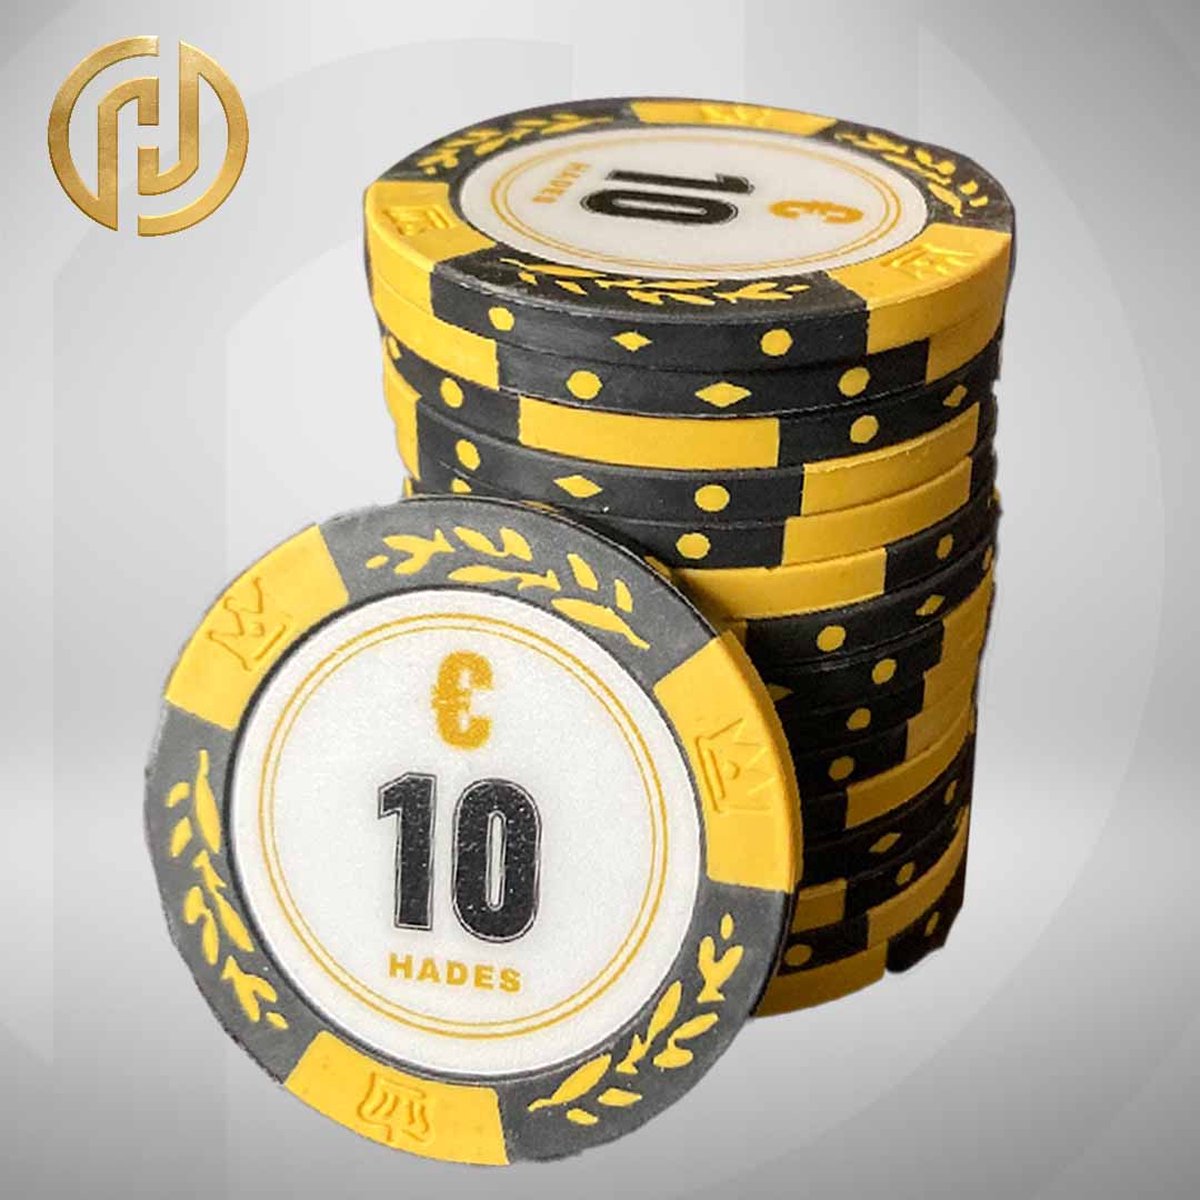 Mec Hades Cashgame Classic Poker Chips €10 geel (25 stuks) pokerchips pokerfiches poker fiches clay chips pokerspel pokerset poker set